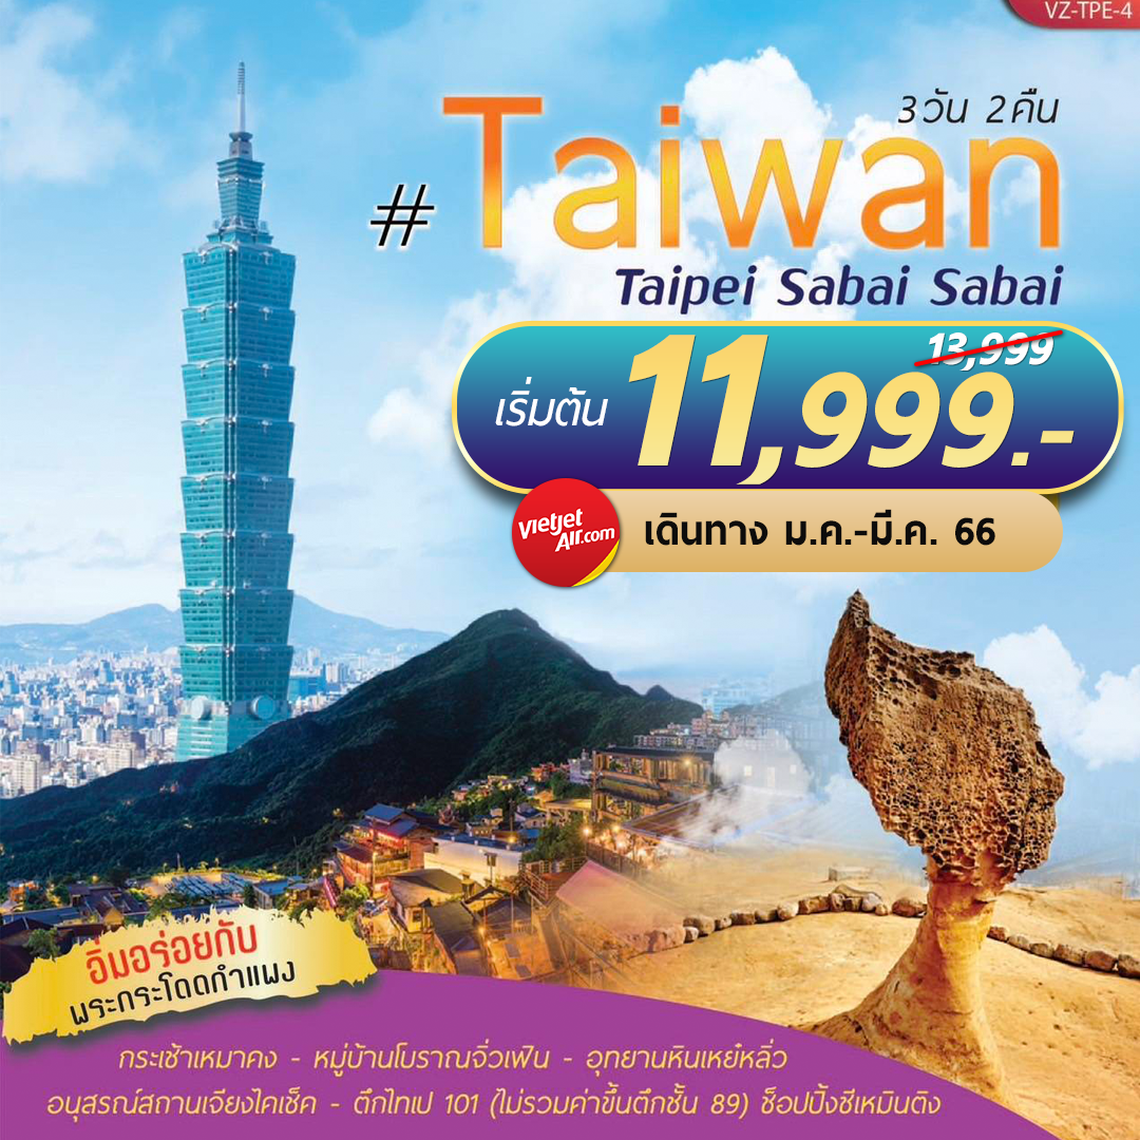 TAIWAN SABAI SABAI 3D2N  By VZ